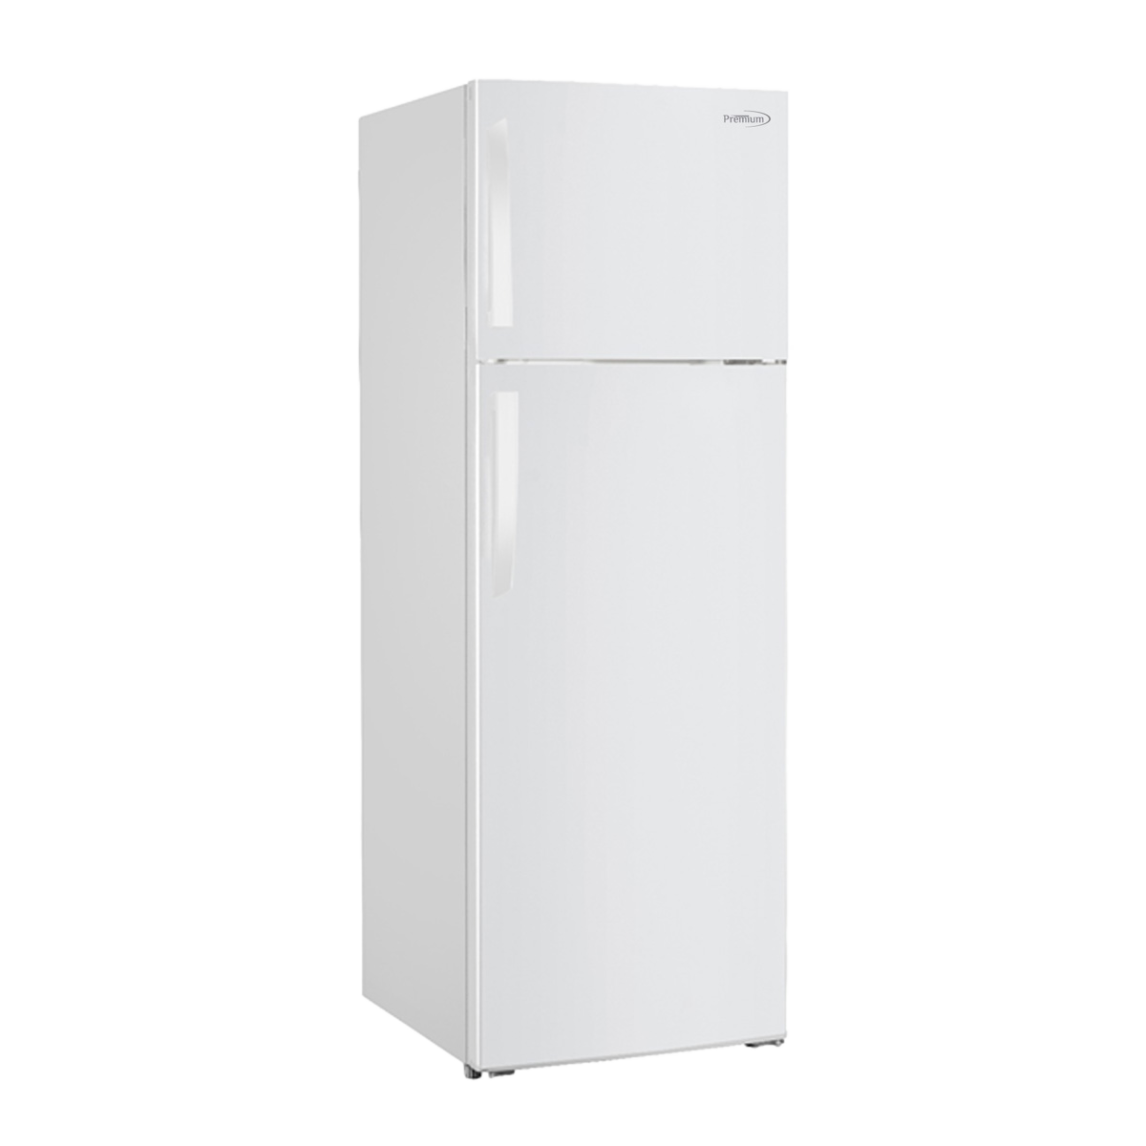 Premium - 7.0 CuFt Top Mount Compact Refrigerator In White